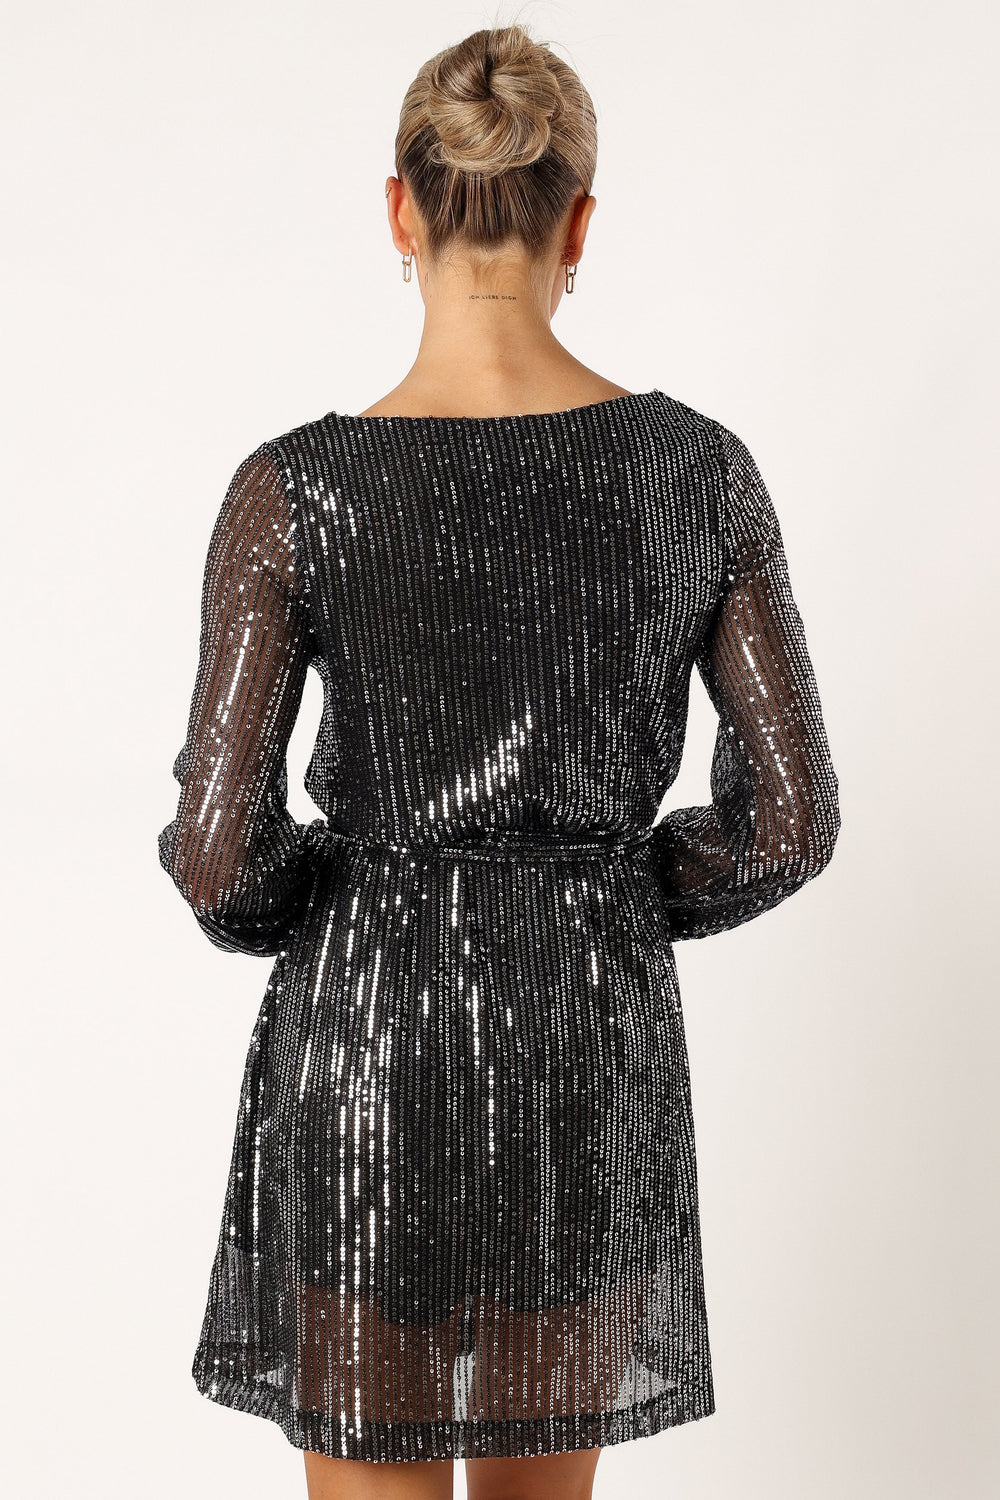 Petal and Pup USA DRESSES Linnie Long Sleeve Mini Dress - Black Sequin